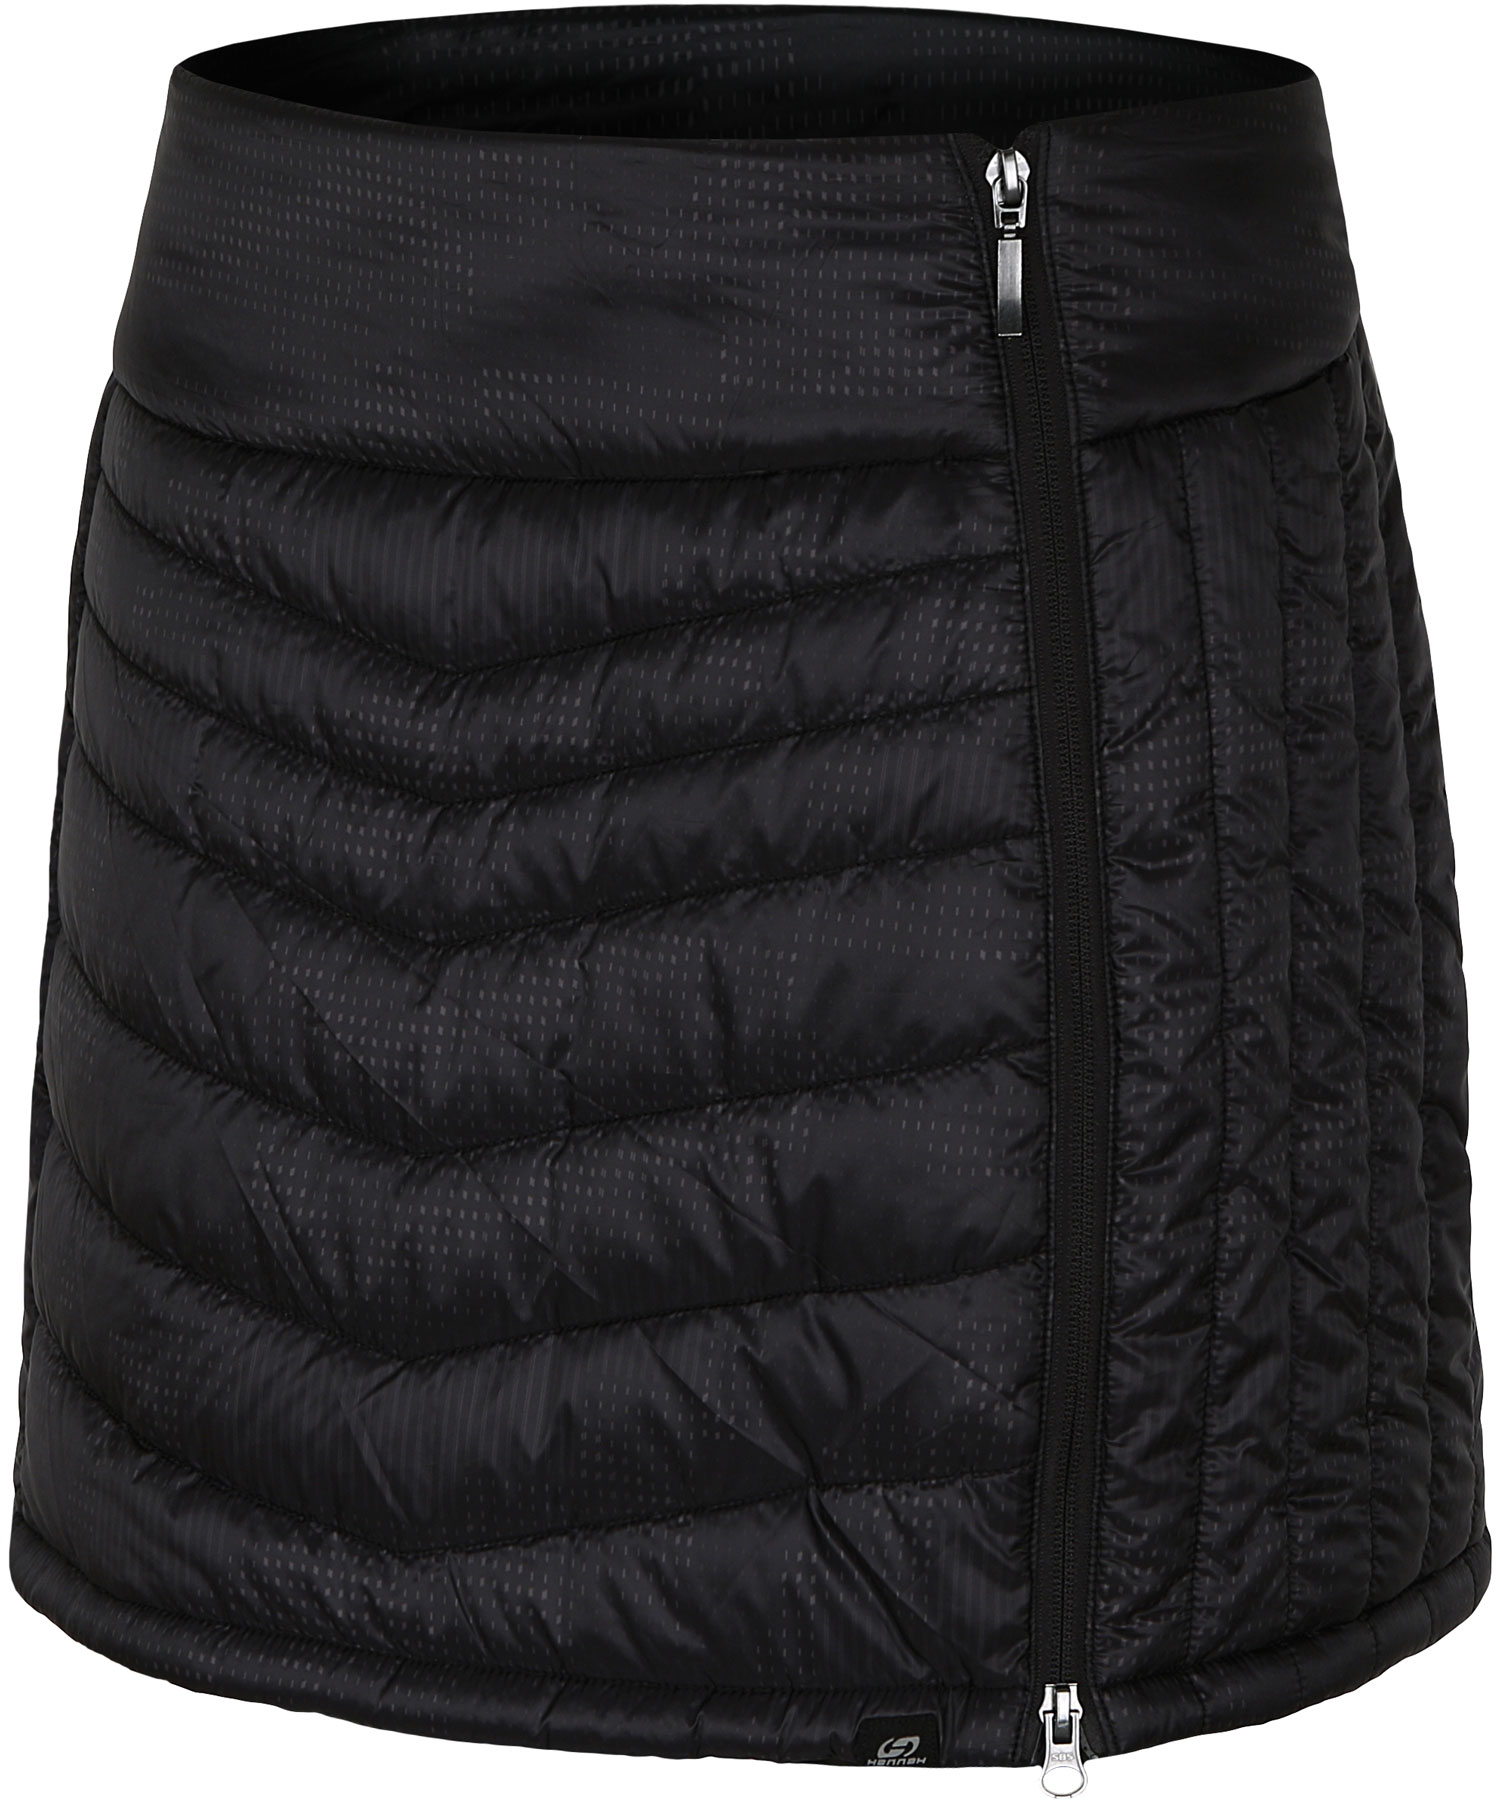 Women's insulated skirt